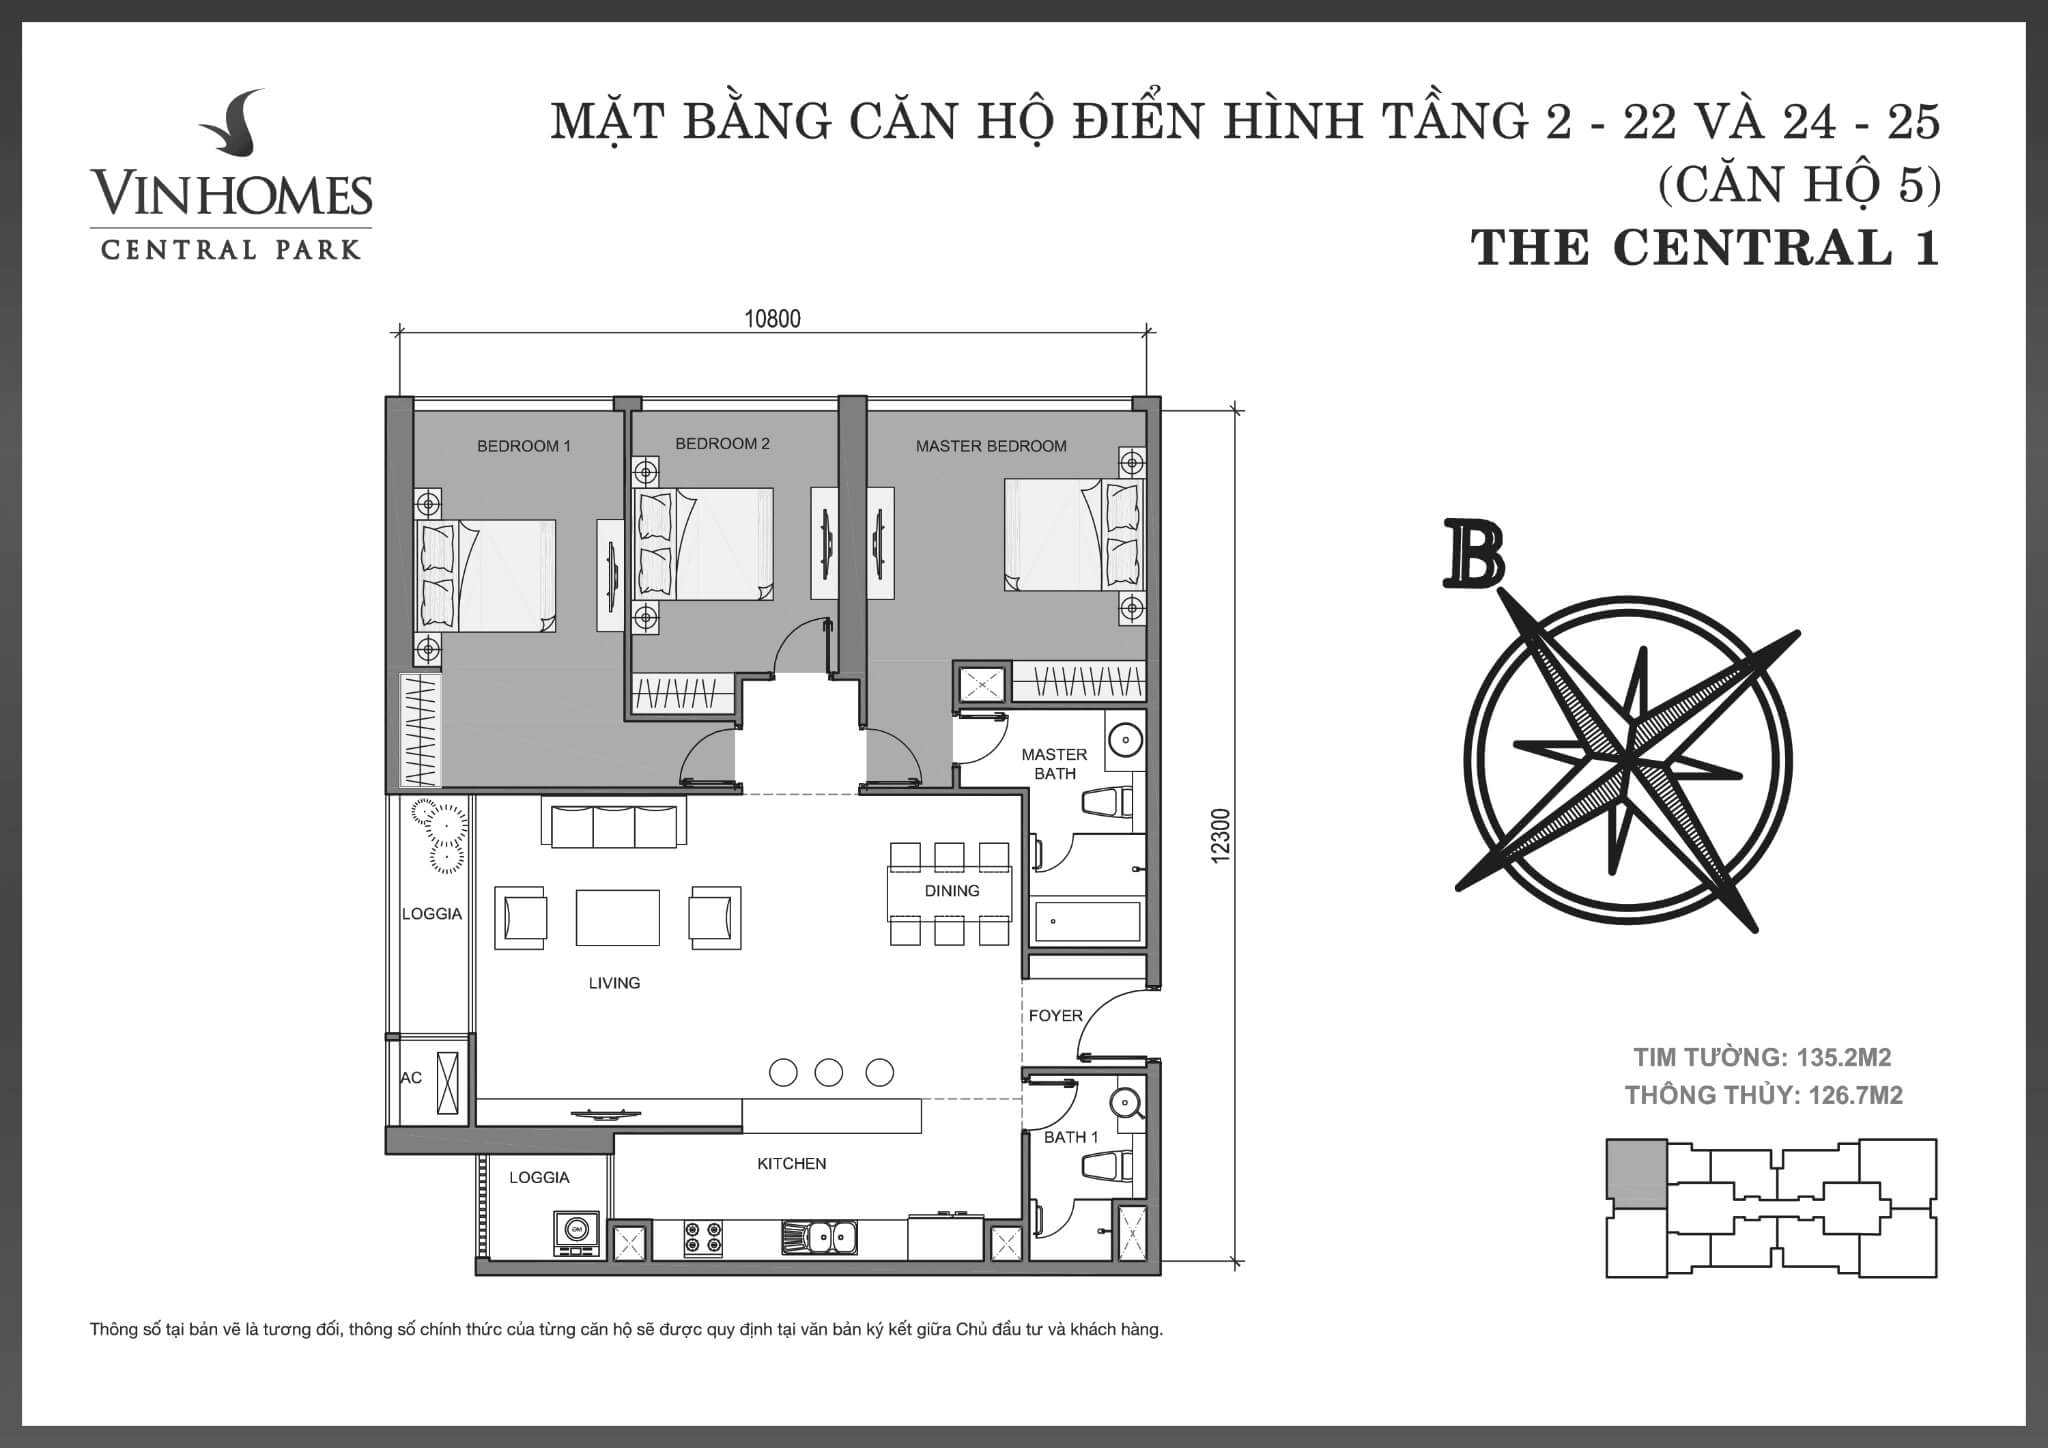 Layout căn hộ số 05 tầng 2-25 tòa The Central 1 - Mặt bằng Vinhomes Central Park